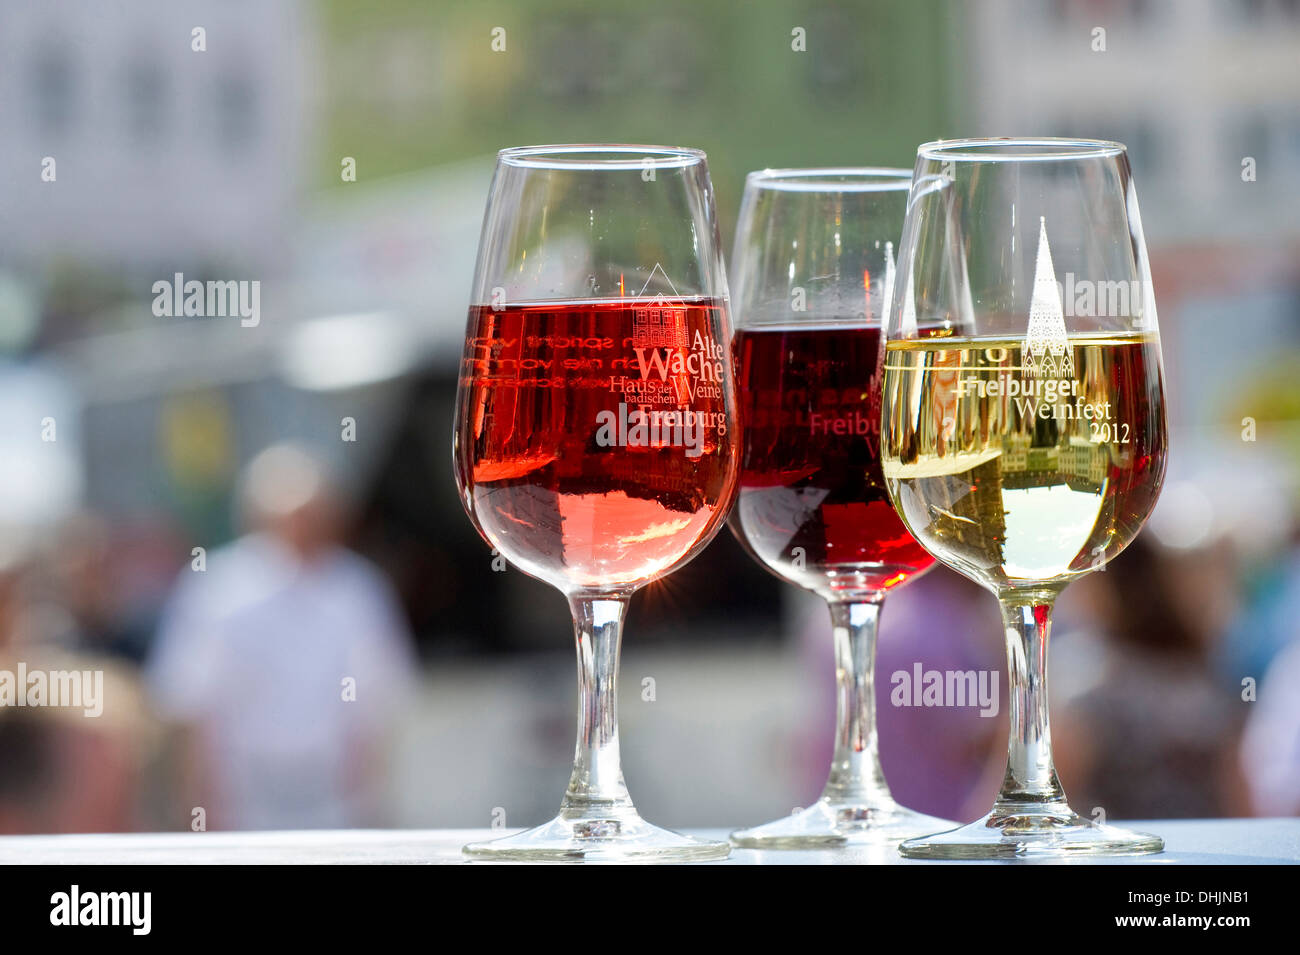 Glasses of wine at the wine festival, July 2012, Freiburg im Breisgau, Black Forest, Baden-Wuerttemberg, Germany, Europe Stock Photo